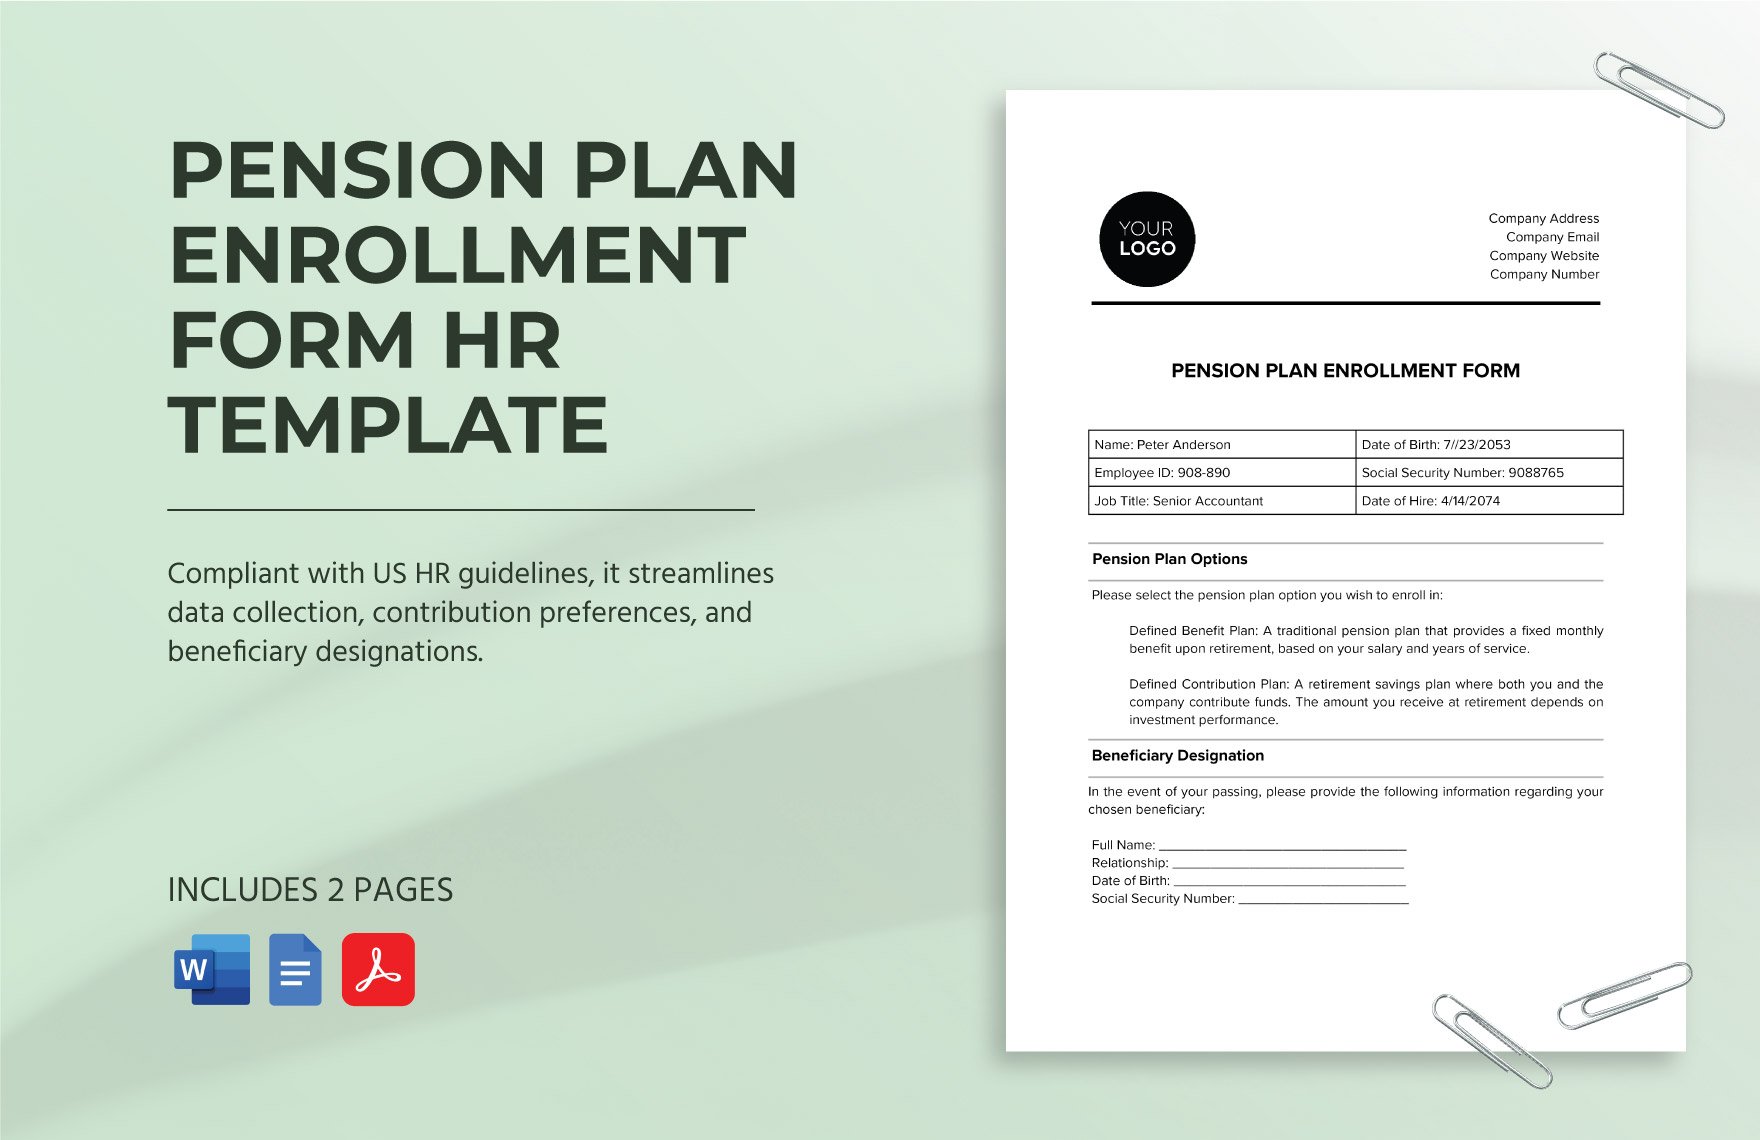 Pension Plan Enrollment Form HR Template in Word, Google Docs, PDF